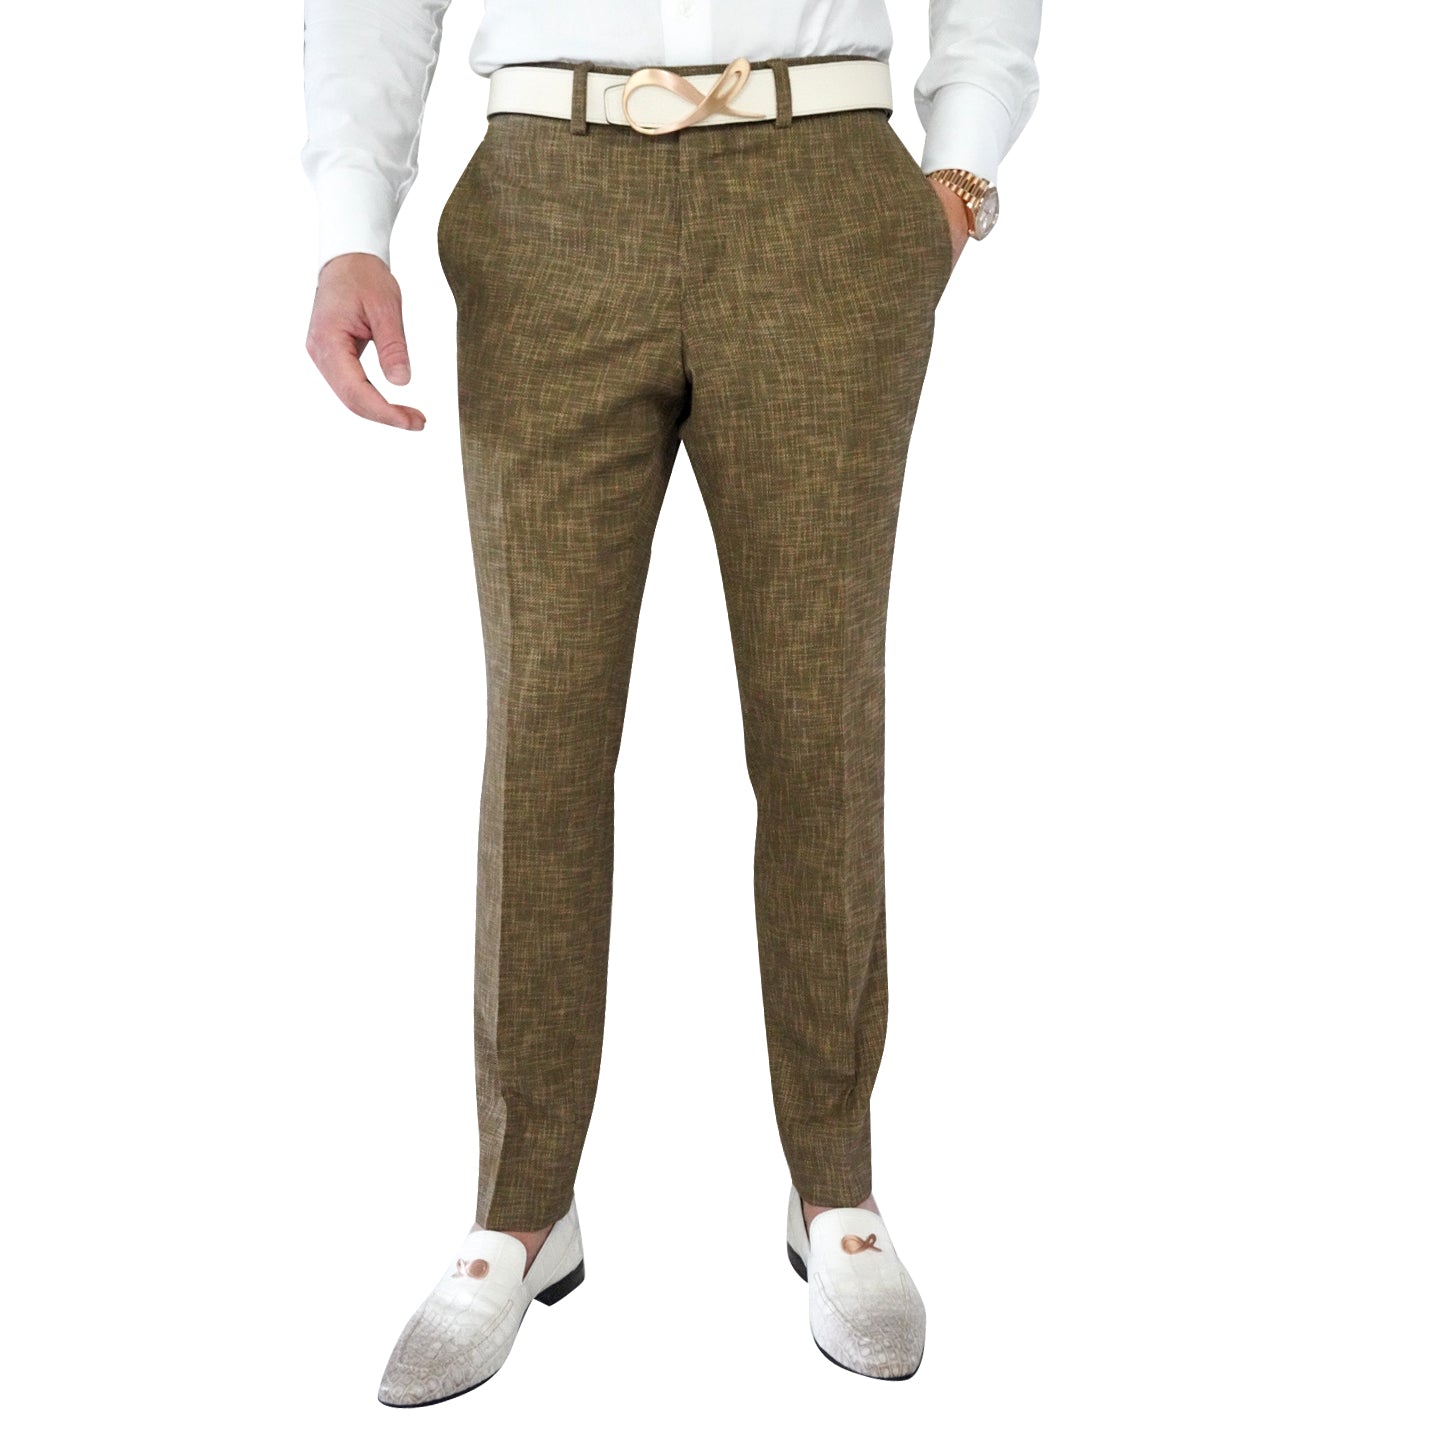 Walnut Lino Tweed Trousers